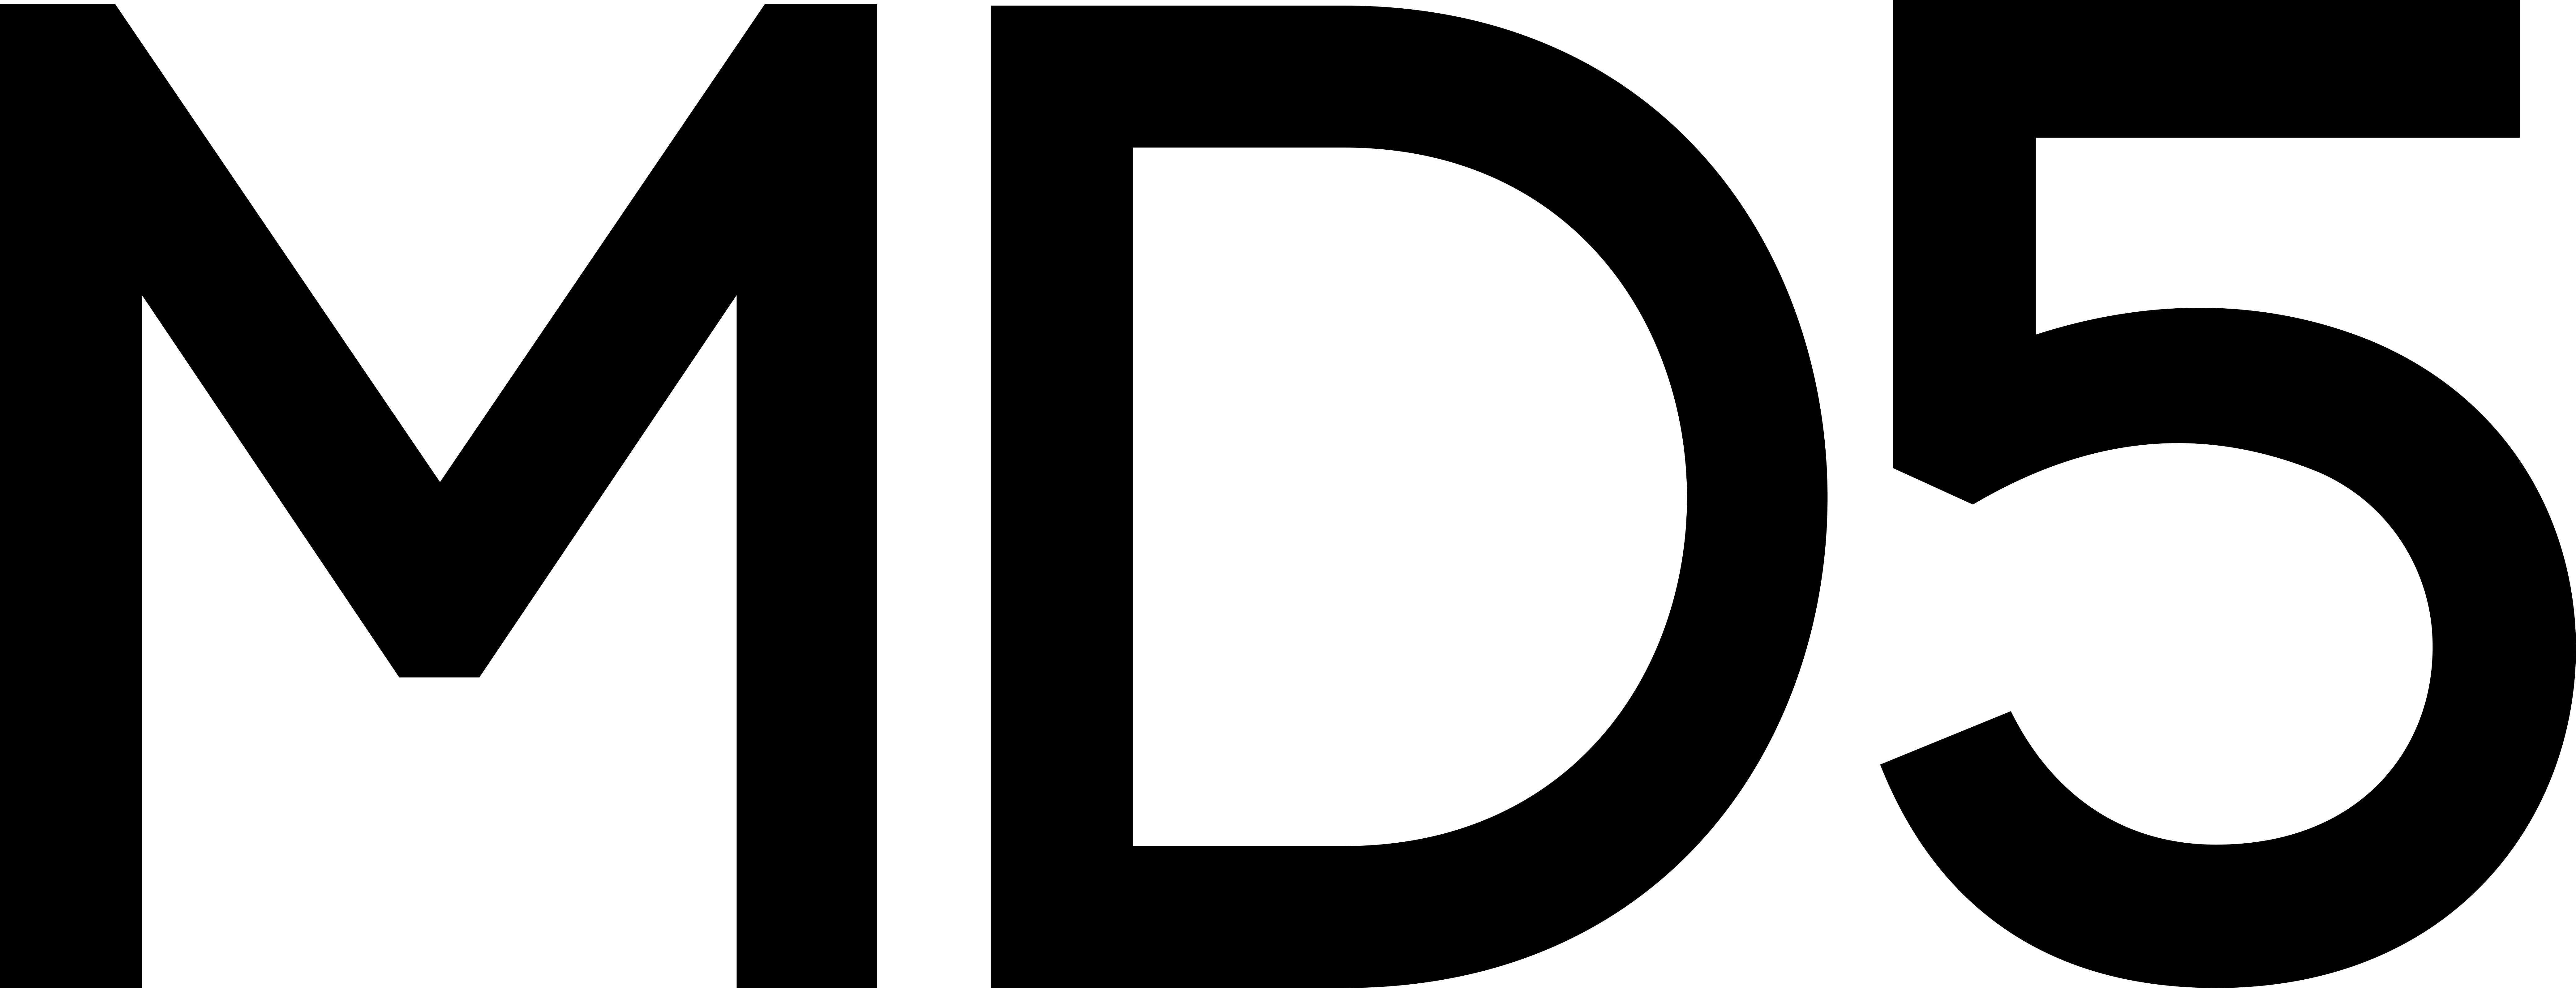 MD5 logo